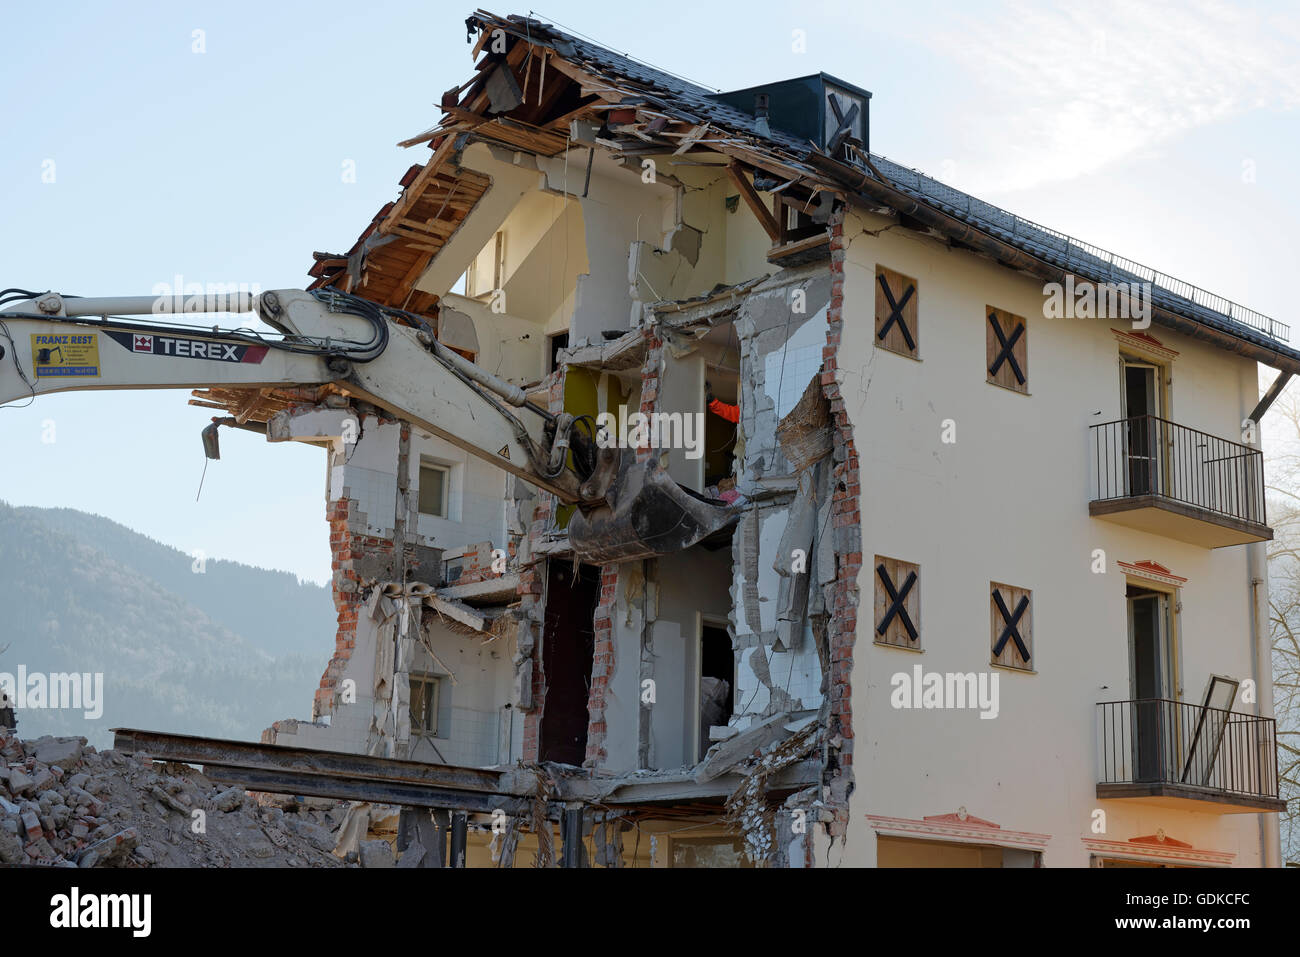 Excavator shovel tearing a wall down, demolition of a building, Bad Heilbrunn, Upper Bavaria, Bavaria, Germany Stock Photo